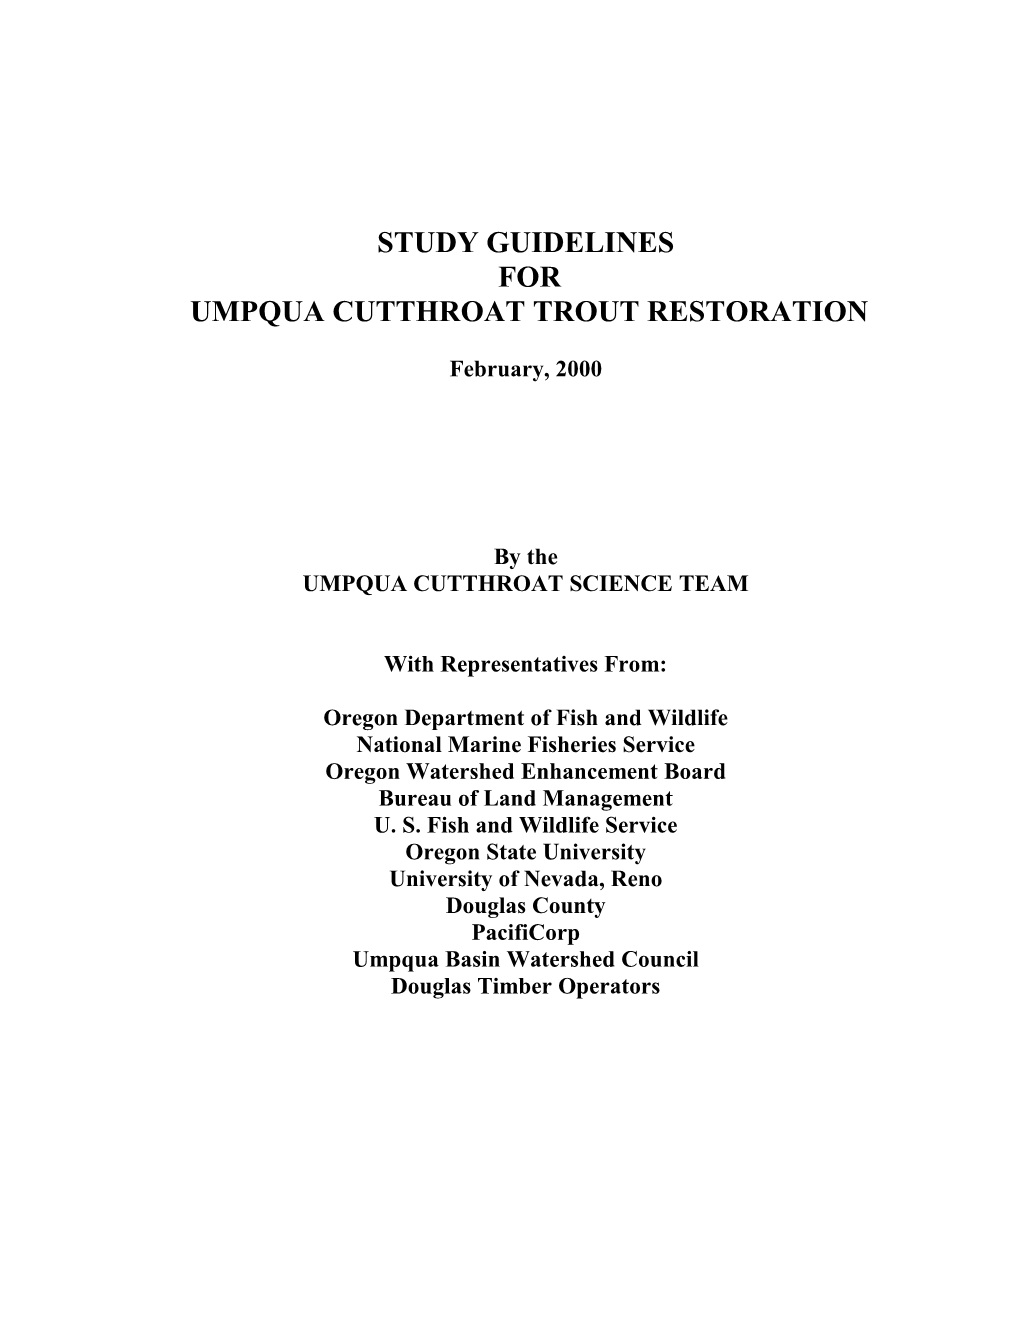 Tudy Guidelines for Umpqua Cutthroat Trout Restoration